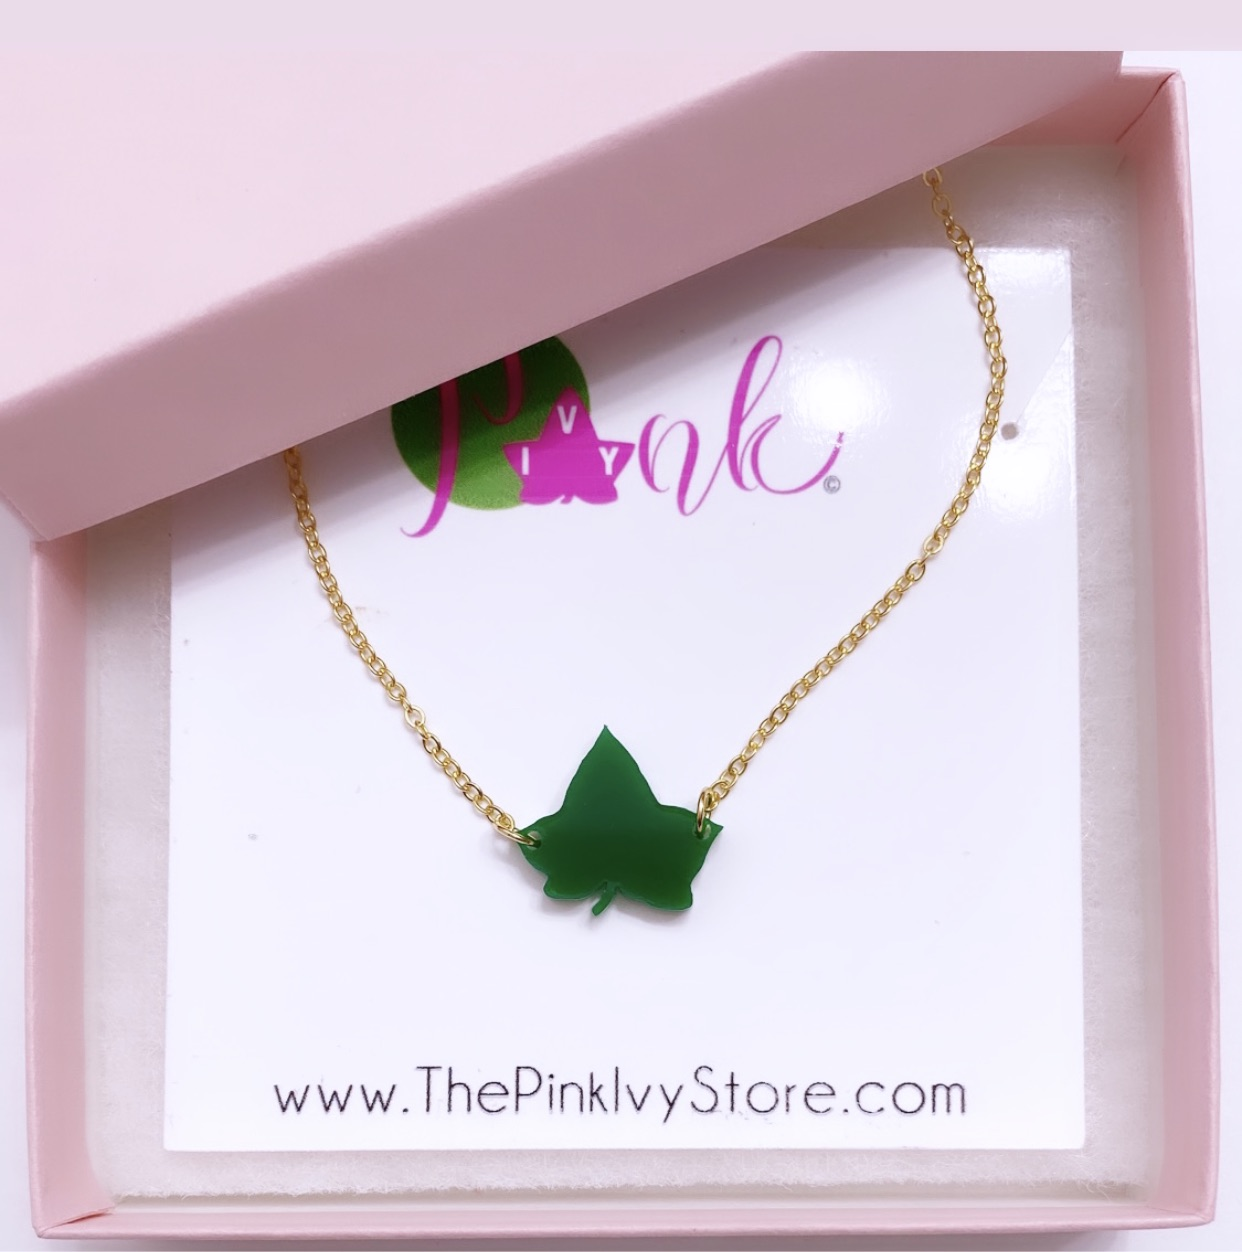 Beautiful handmade AKA green ivy leaf necklace